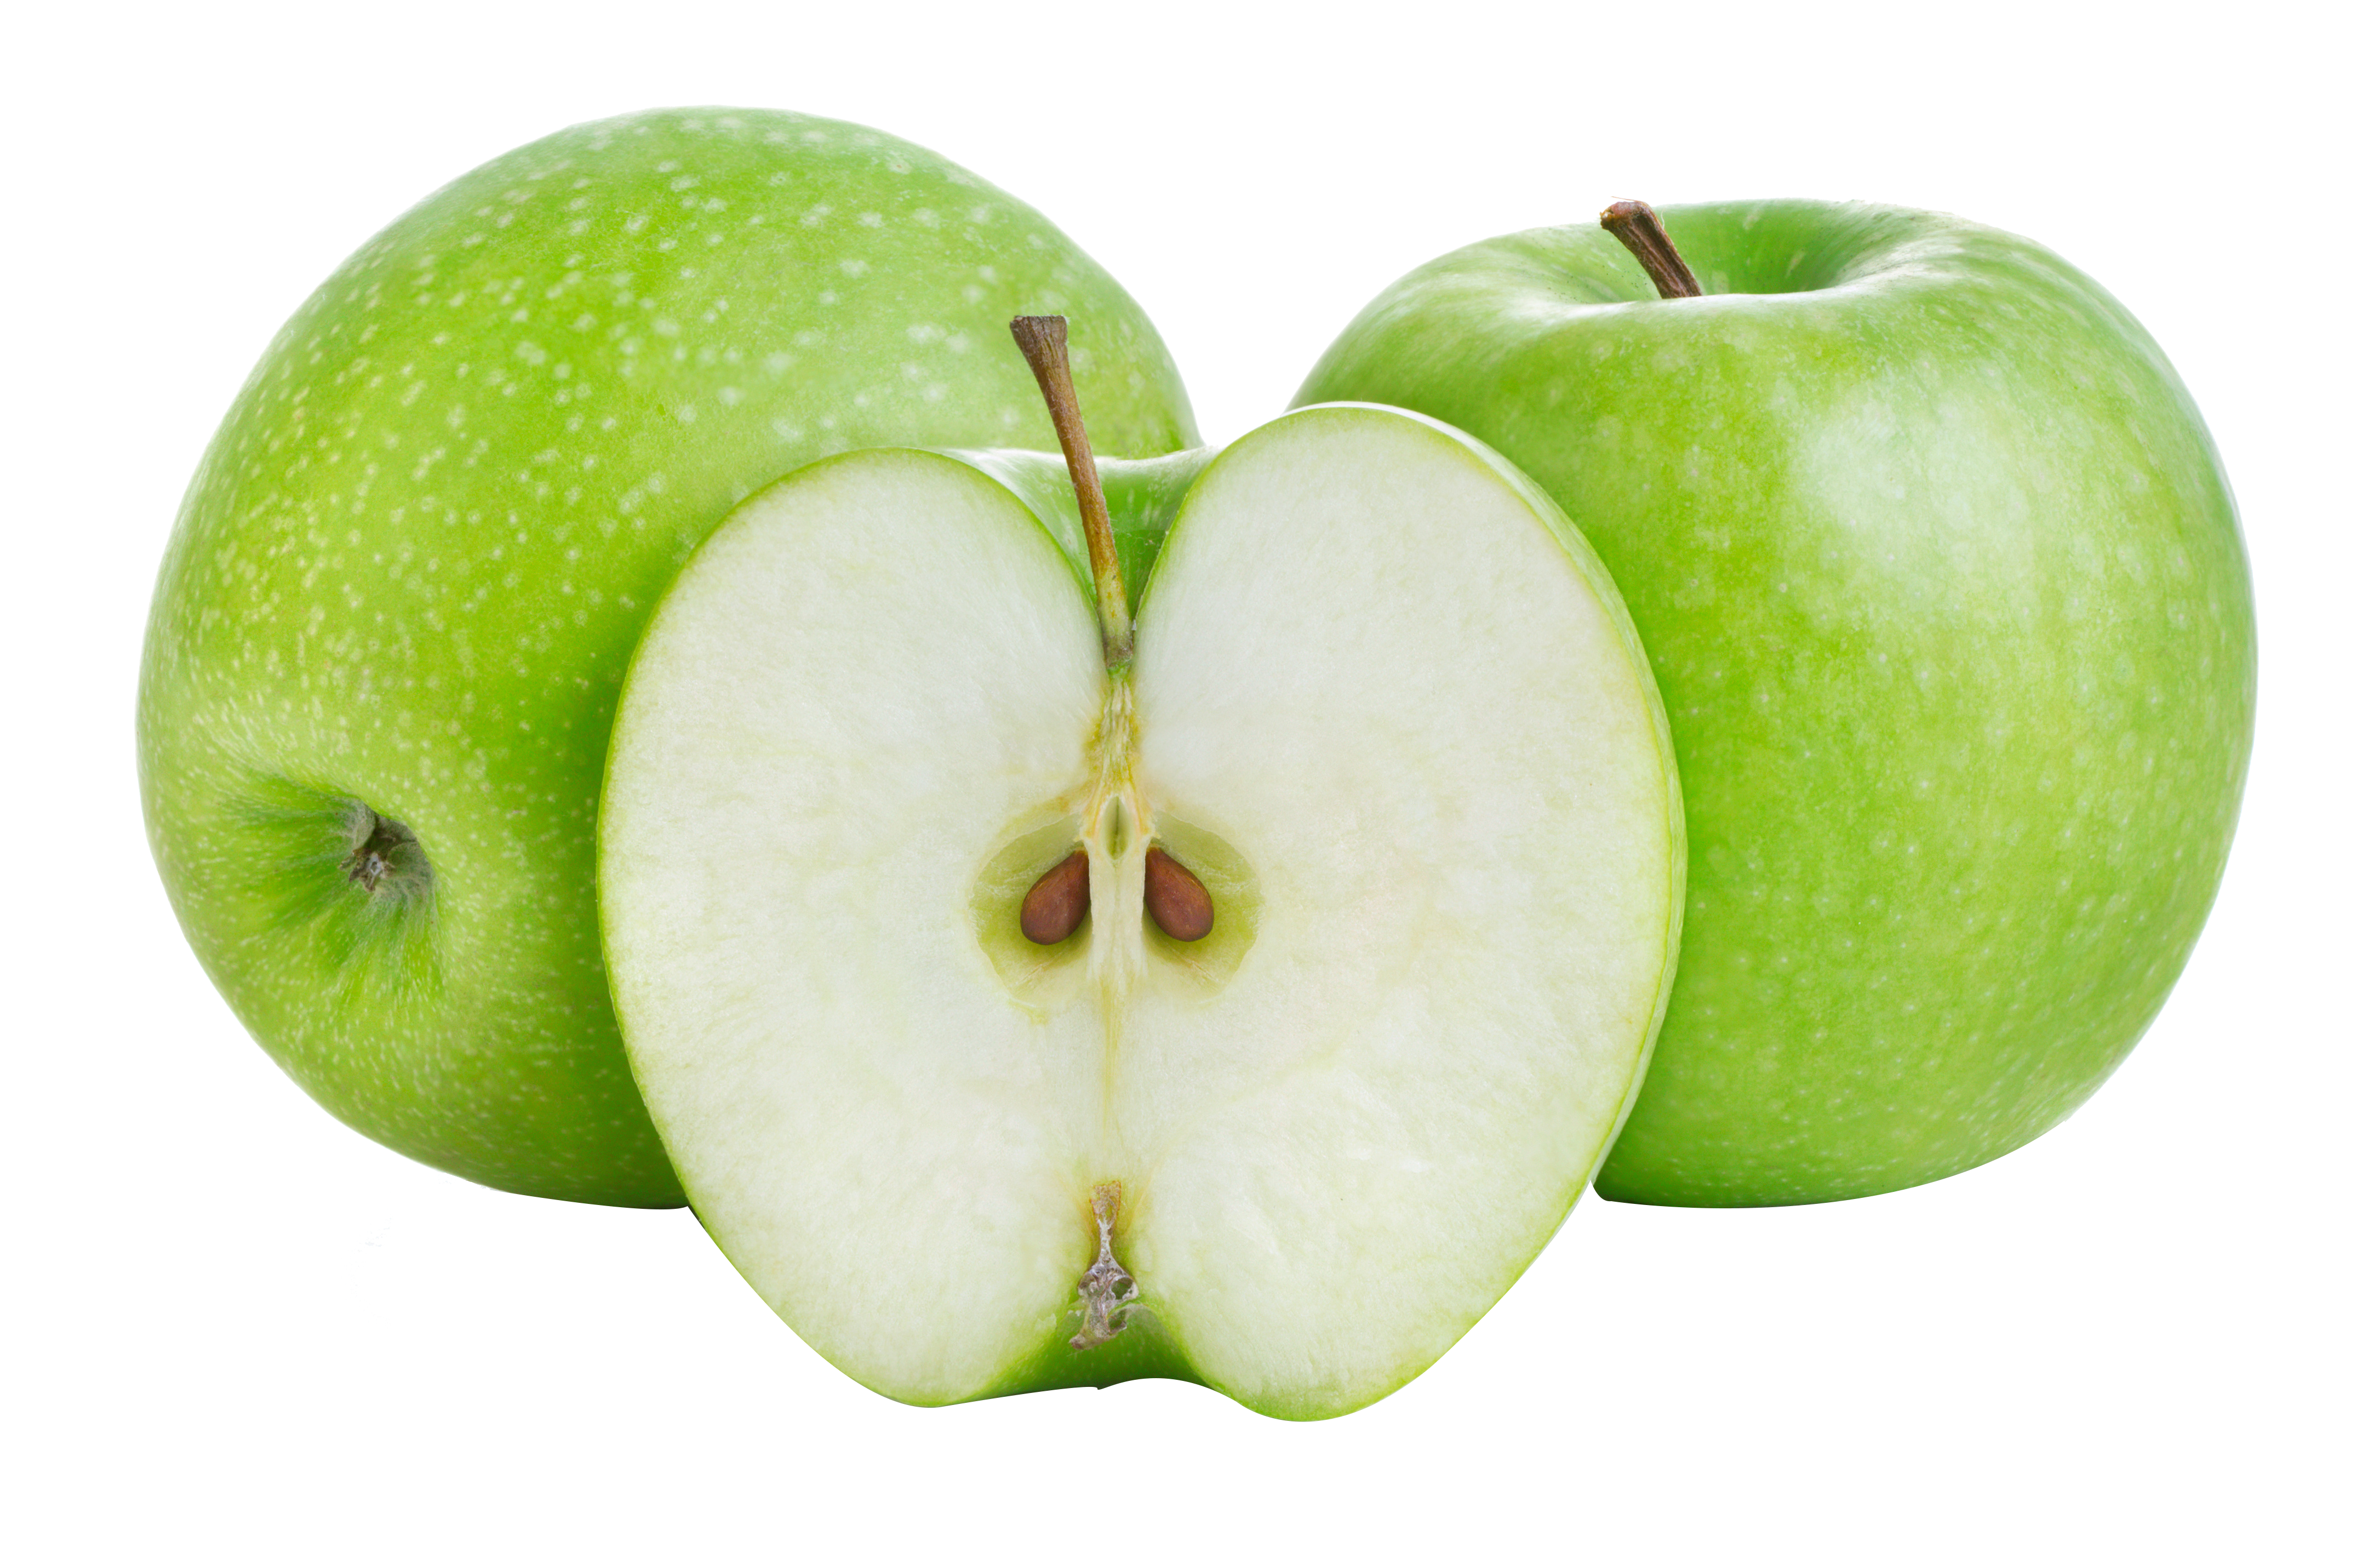 green apple transparent